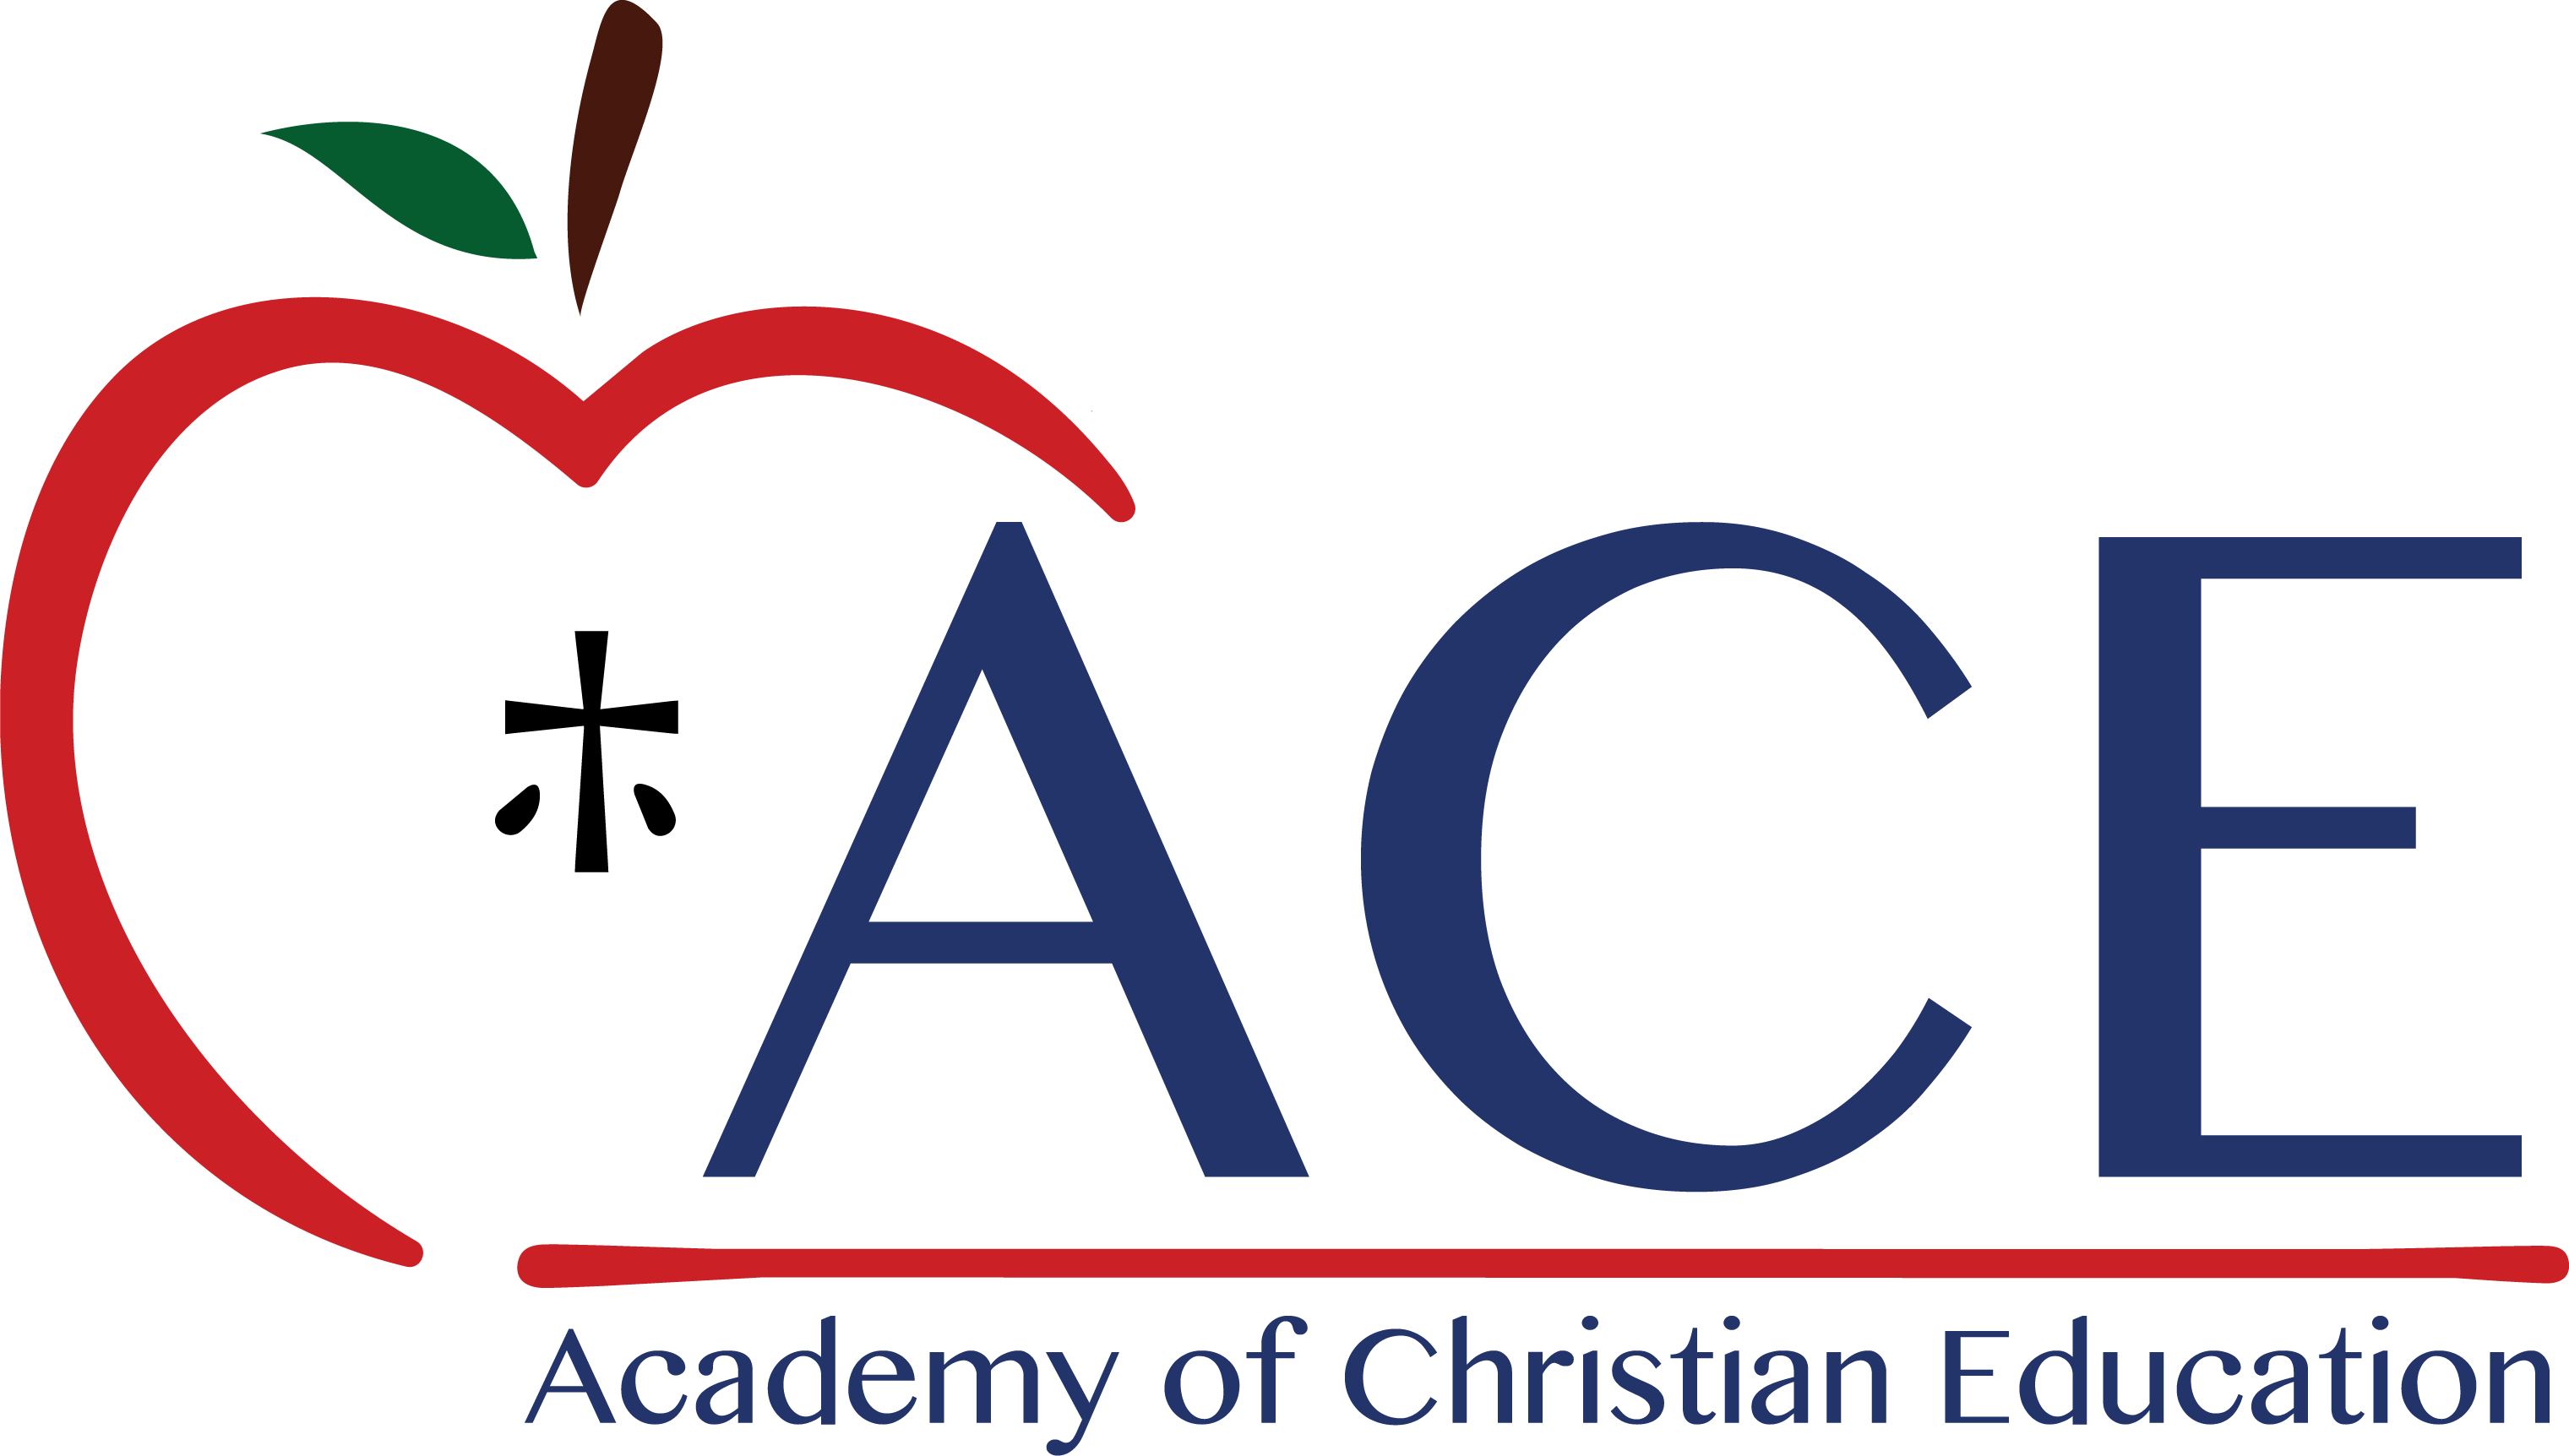 Blog - The Academy of Christian Education